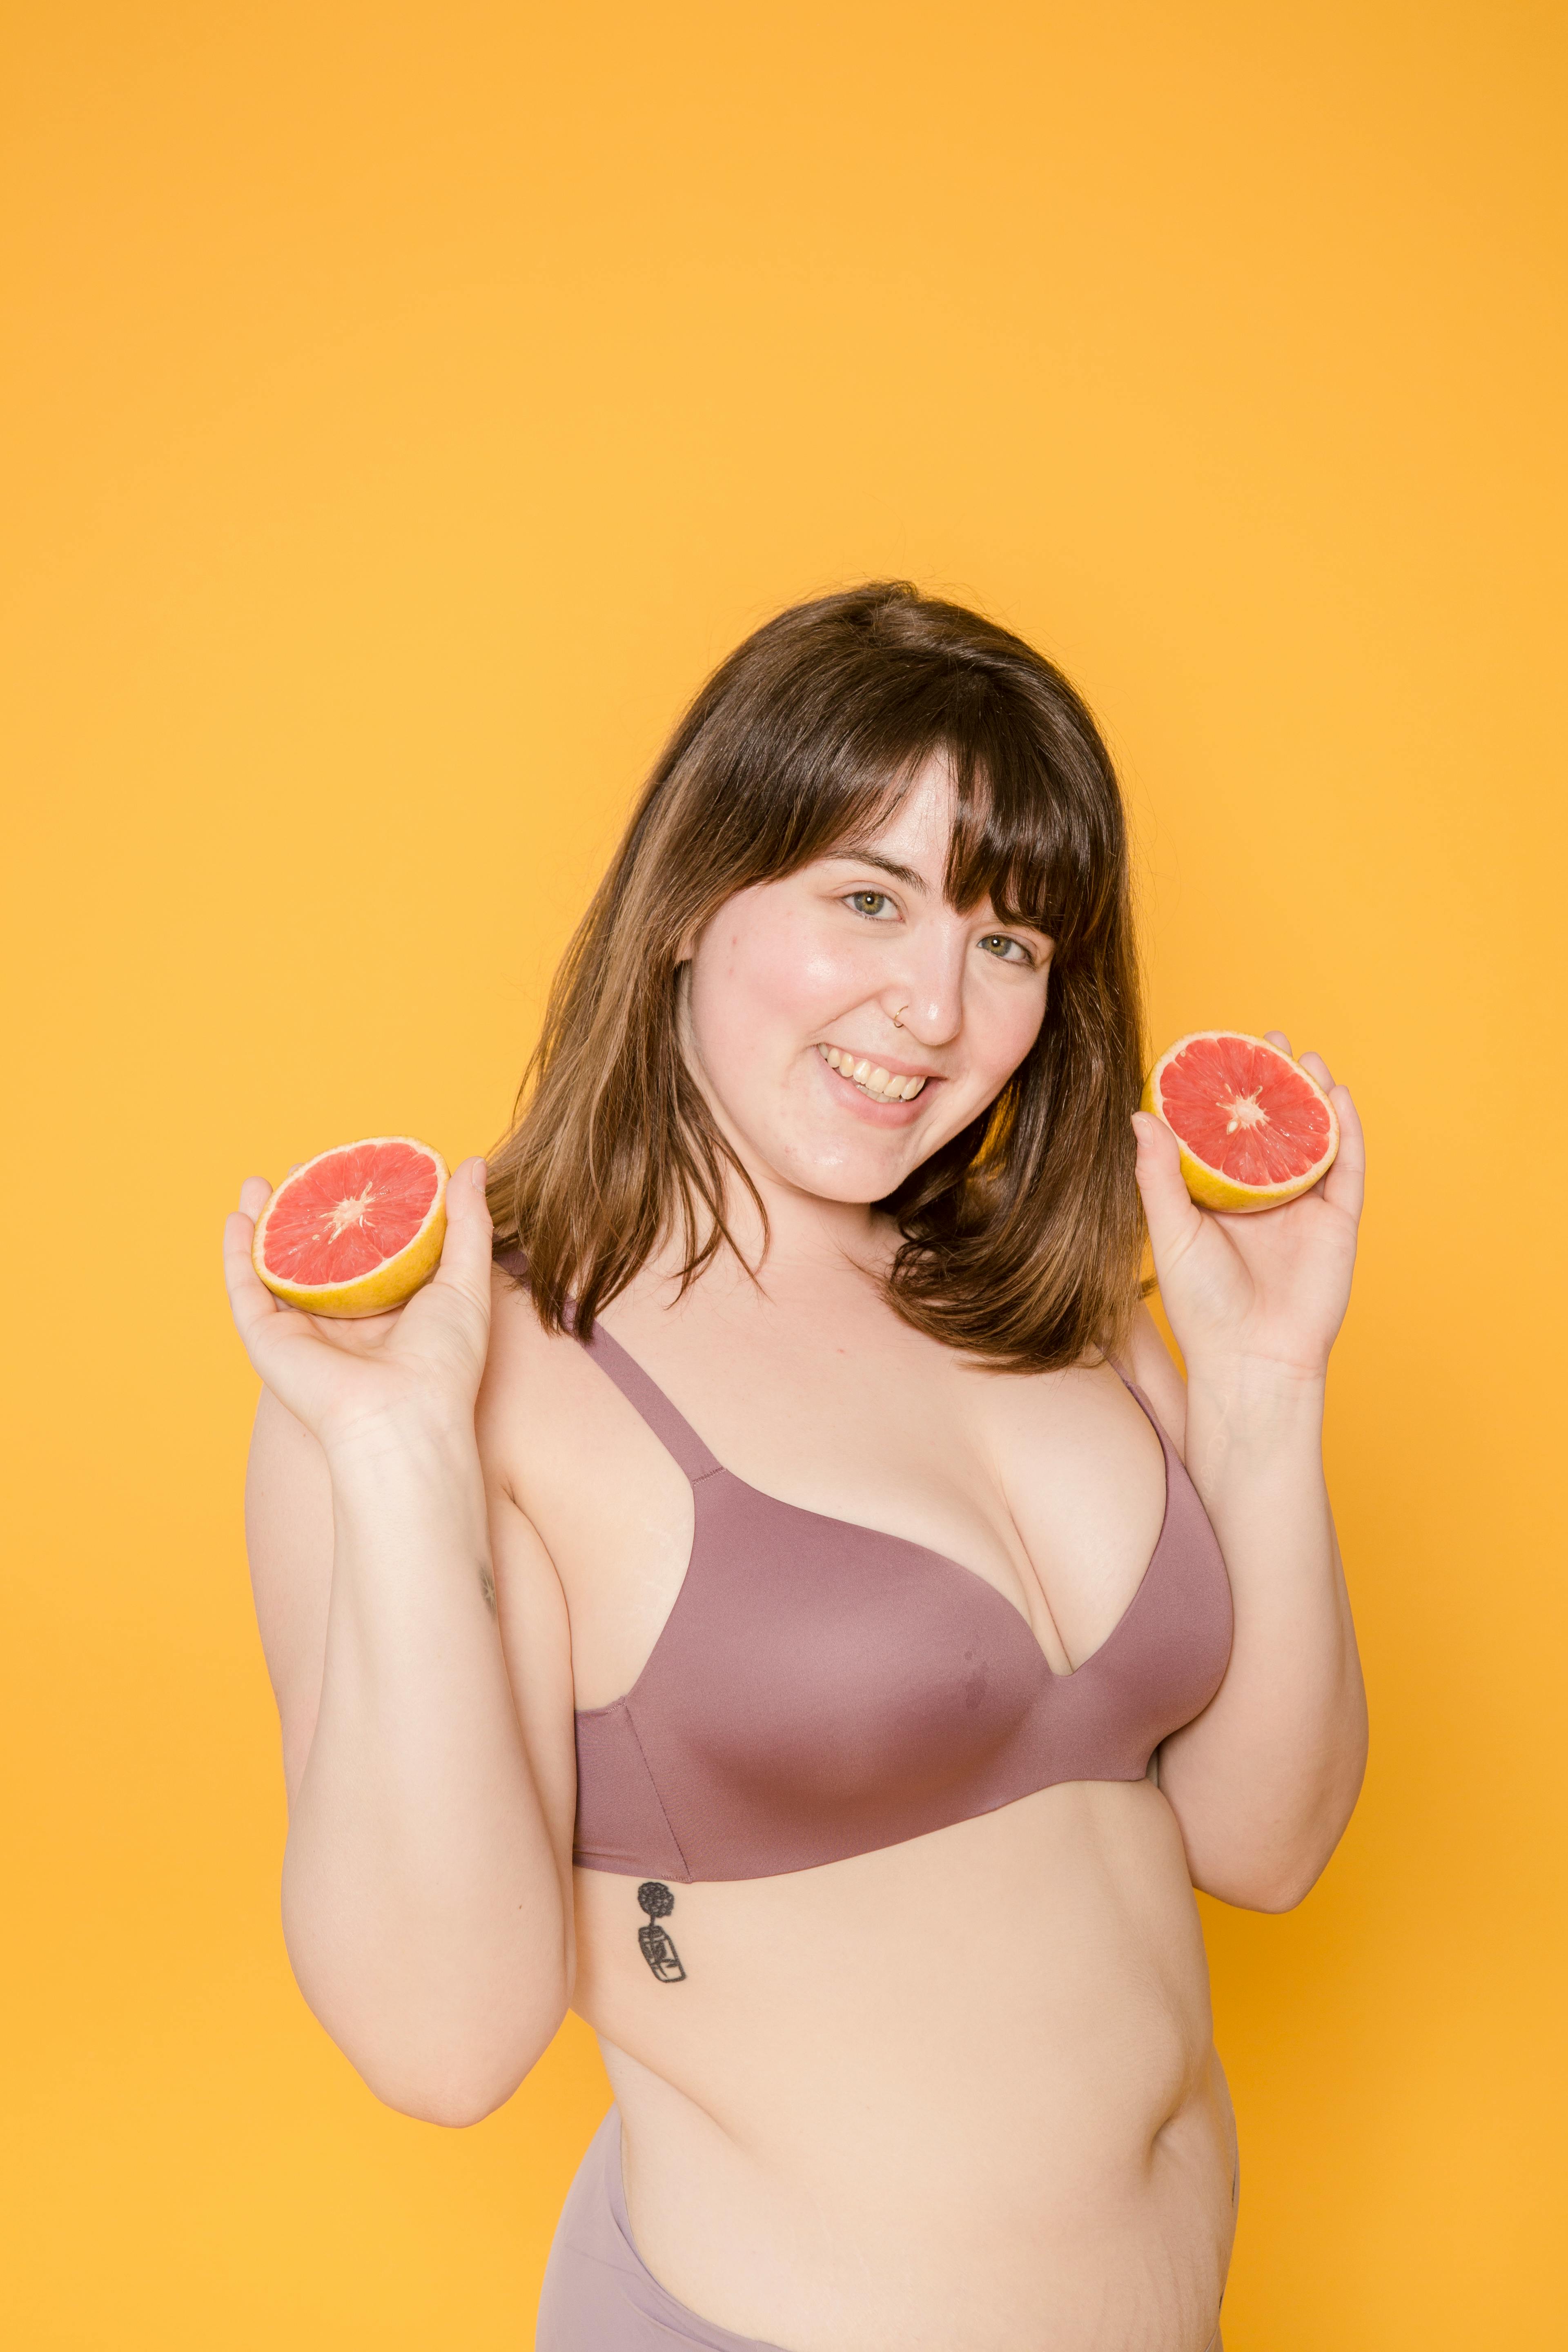 Women Wearing Their Underwear Holding a Sliced Grapefruit · Free